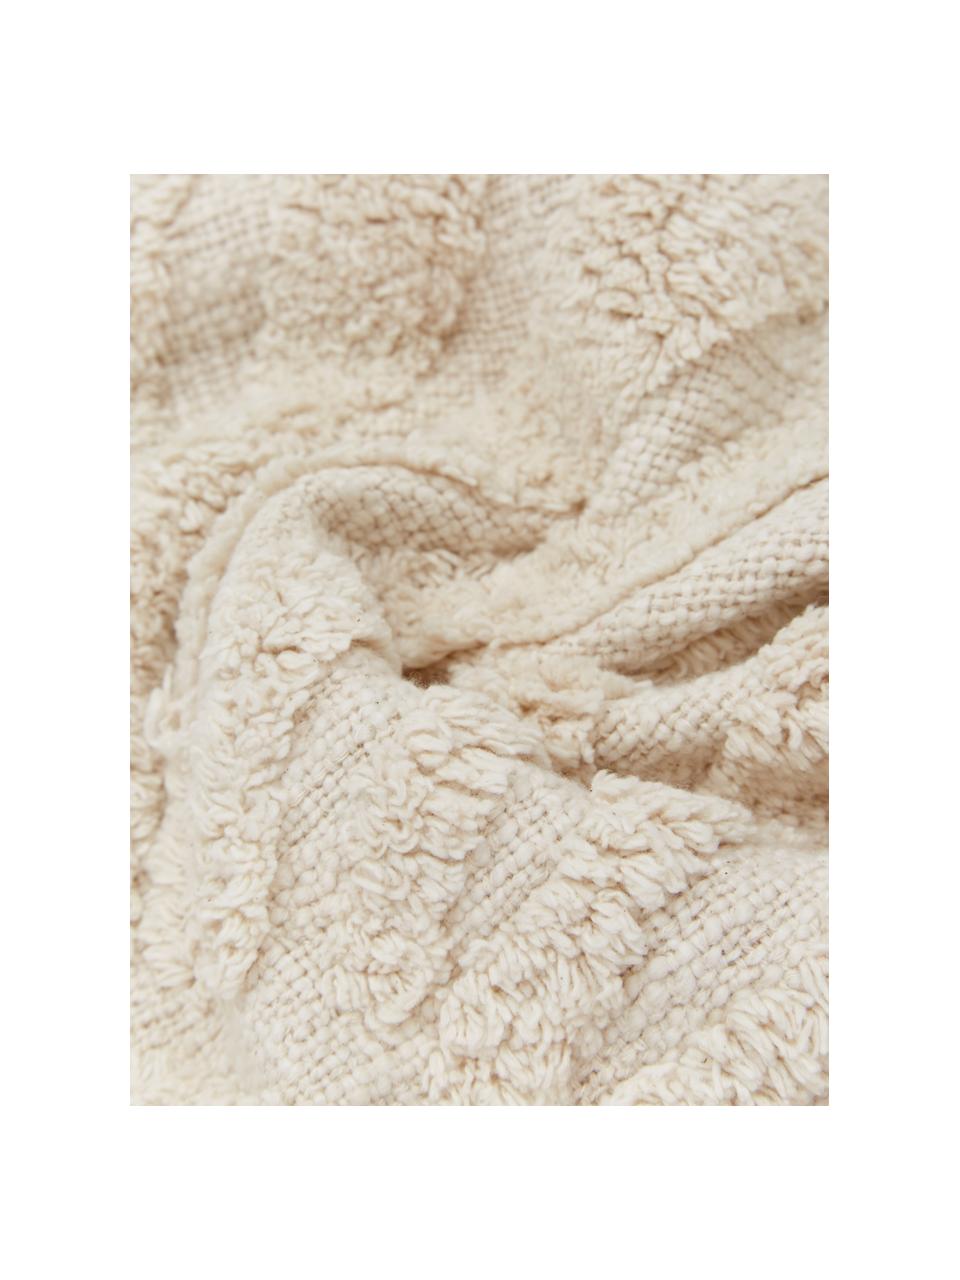 Baumwoll-Kissenhülle Ilari mit Hoch-Tief-Struktur, 100% Baumwolle, Cremefarben, B 45 x L 45 cm